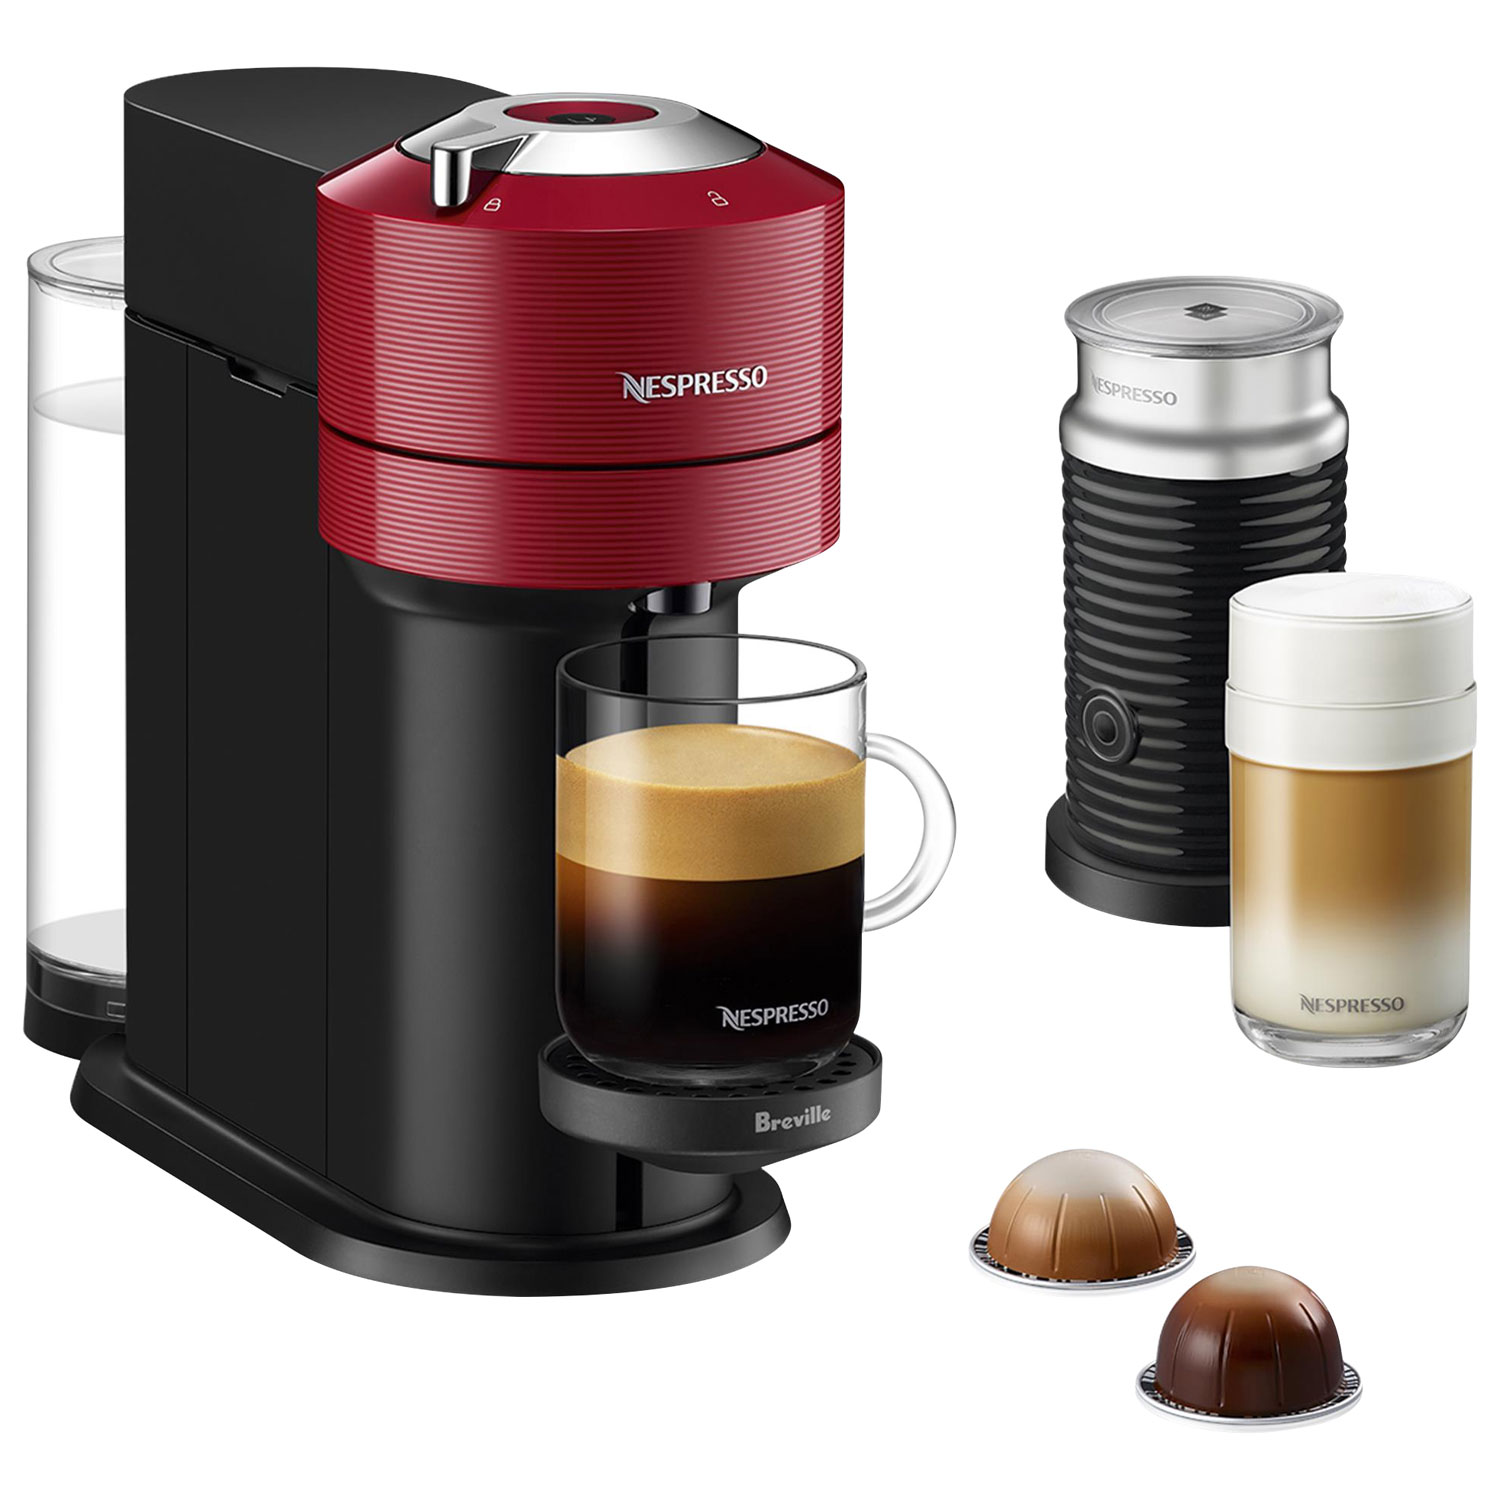 Nespresso Vertuo Next Coffee & Espresso Machine by Breville with Aeroccino Milk Frother - Cherry Red